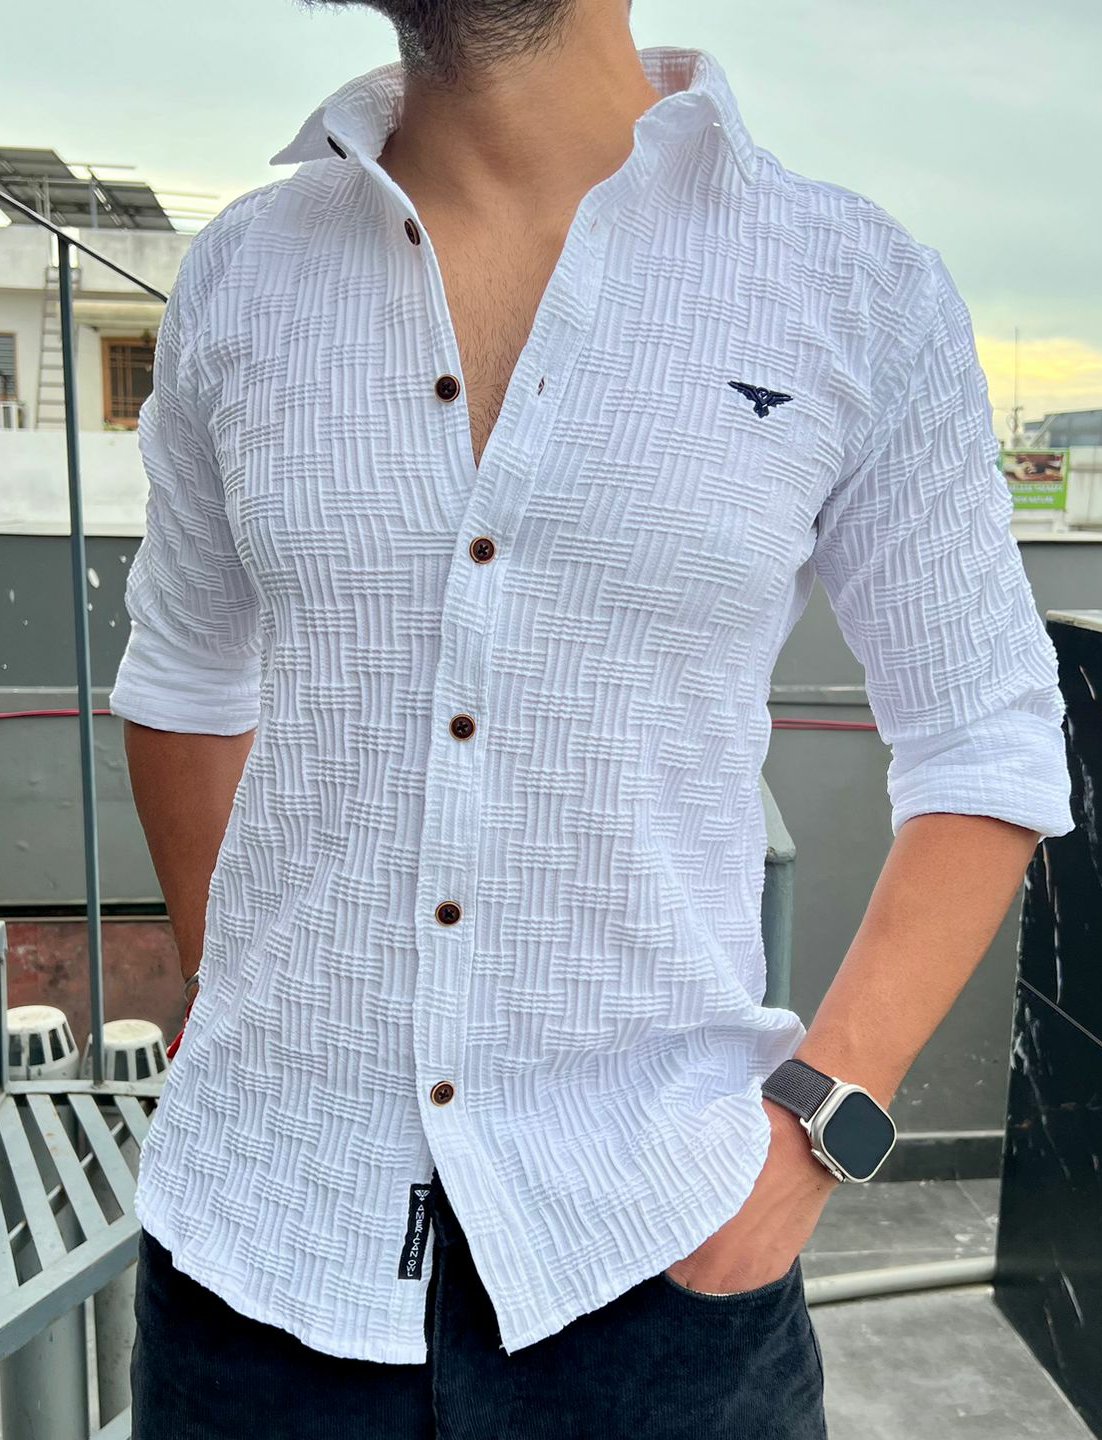 Lycra Textured Shirt - Stark White, L40